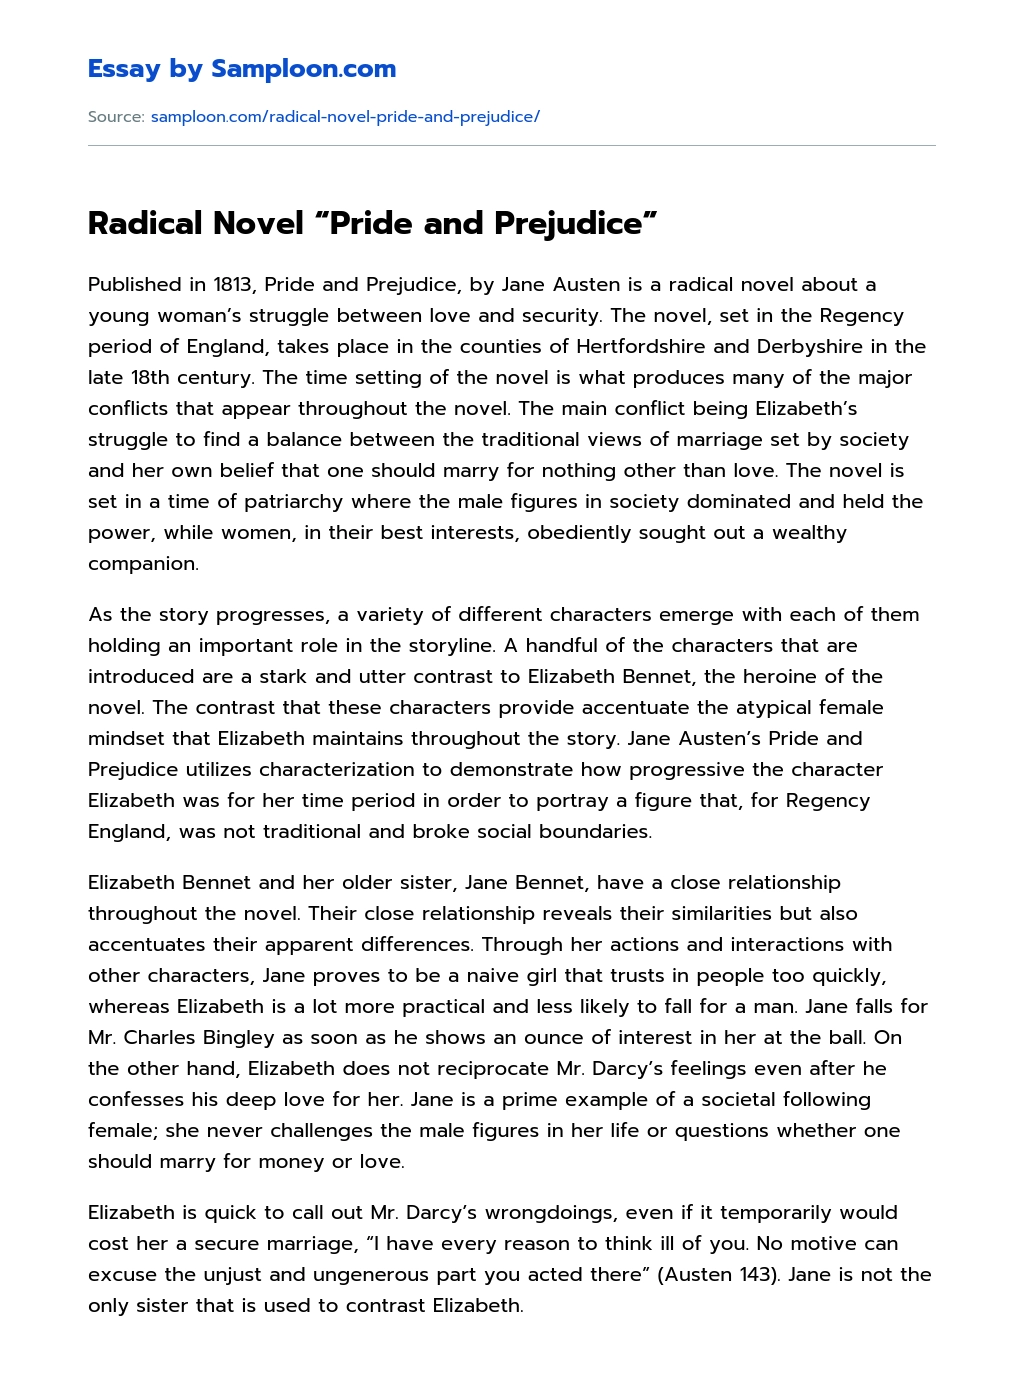 Radical Novel “Pride and Prejudice” Compare And Contrast essay